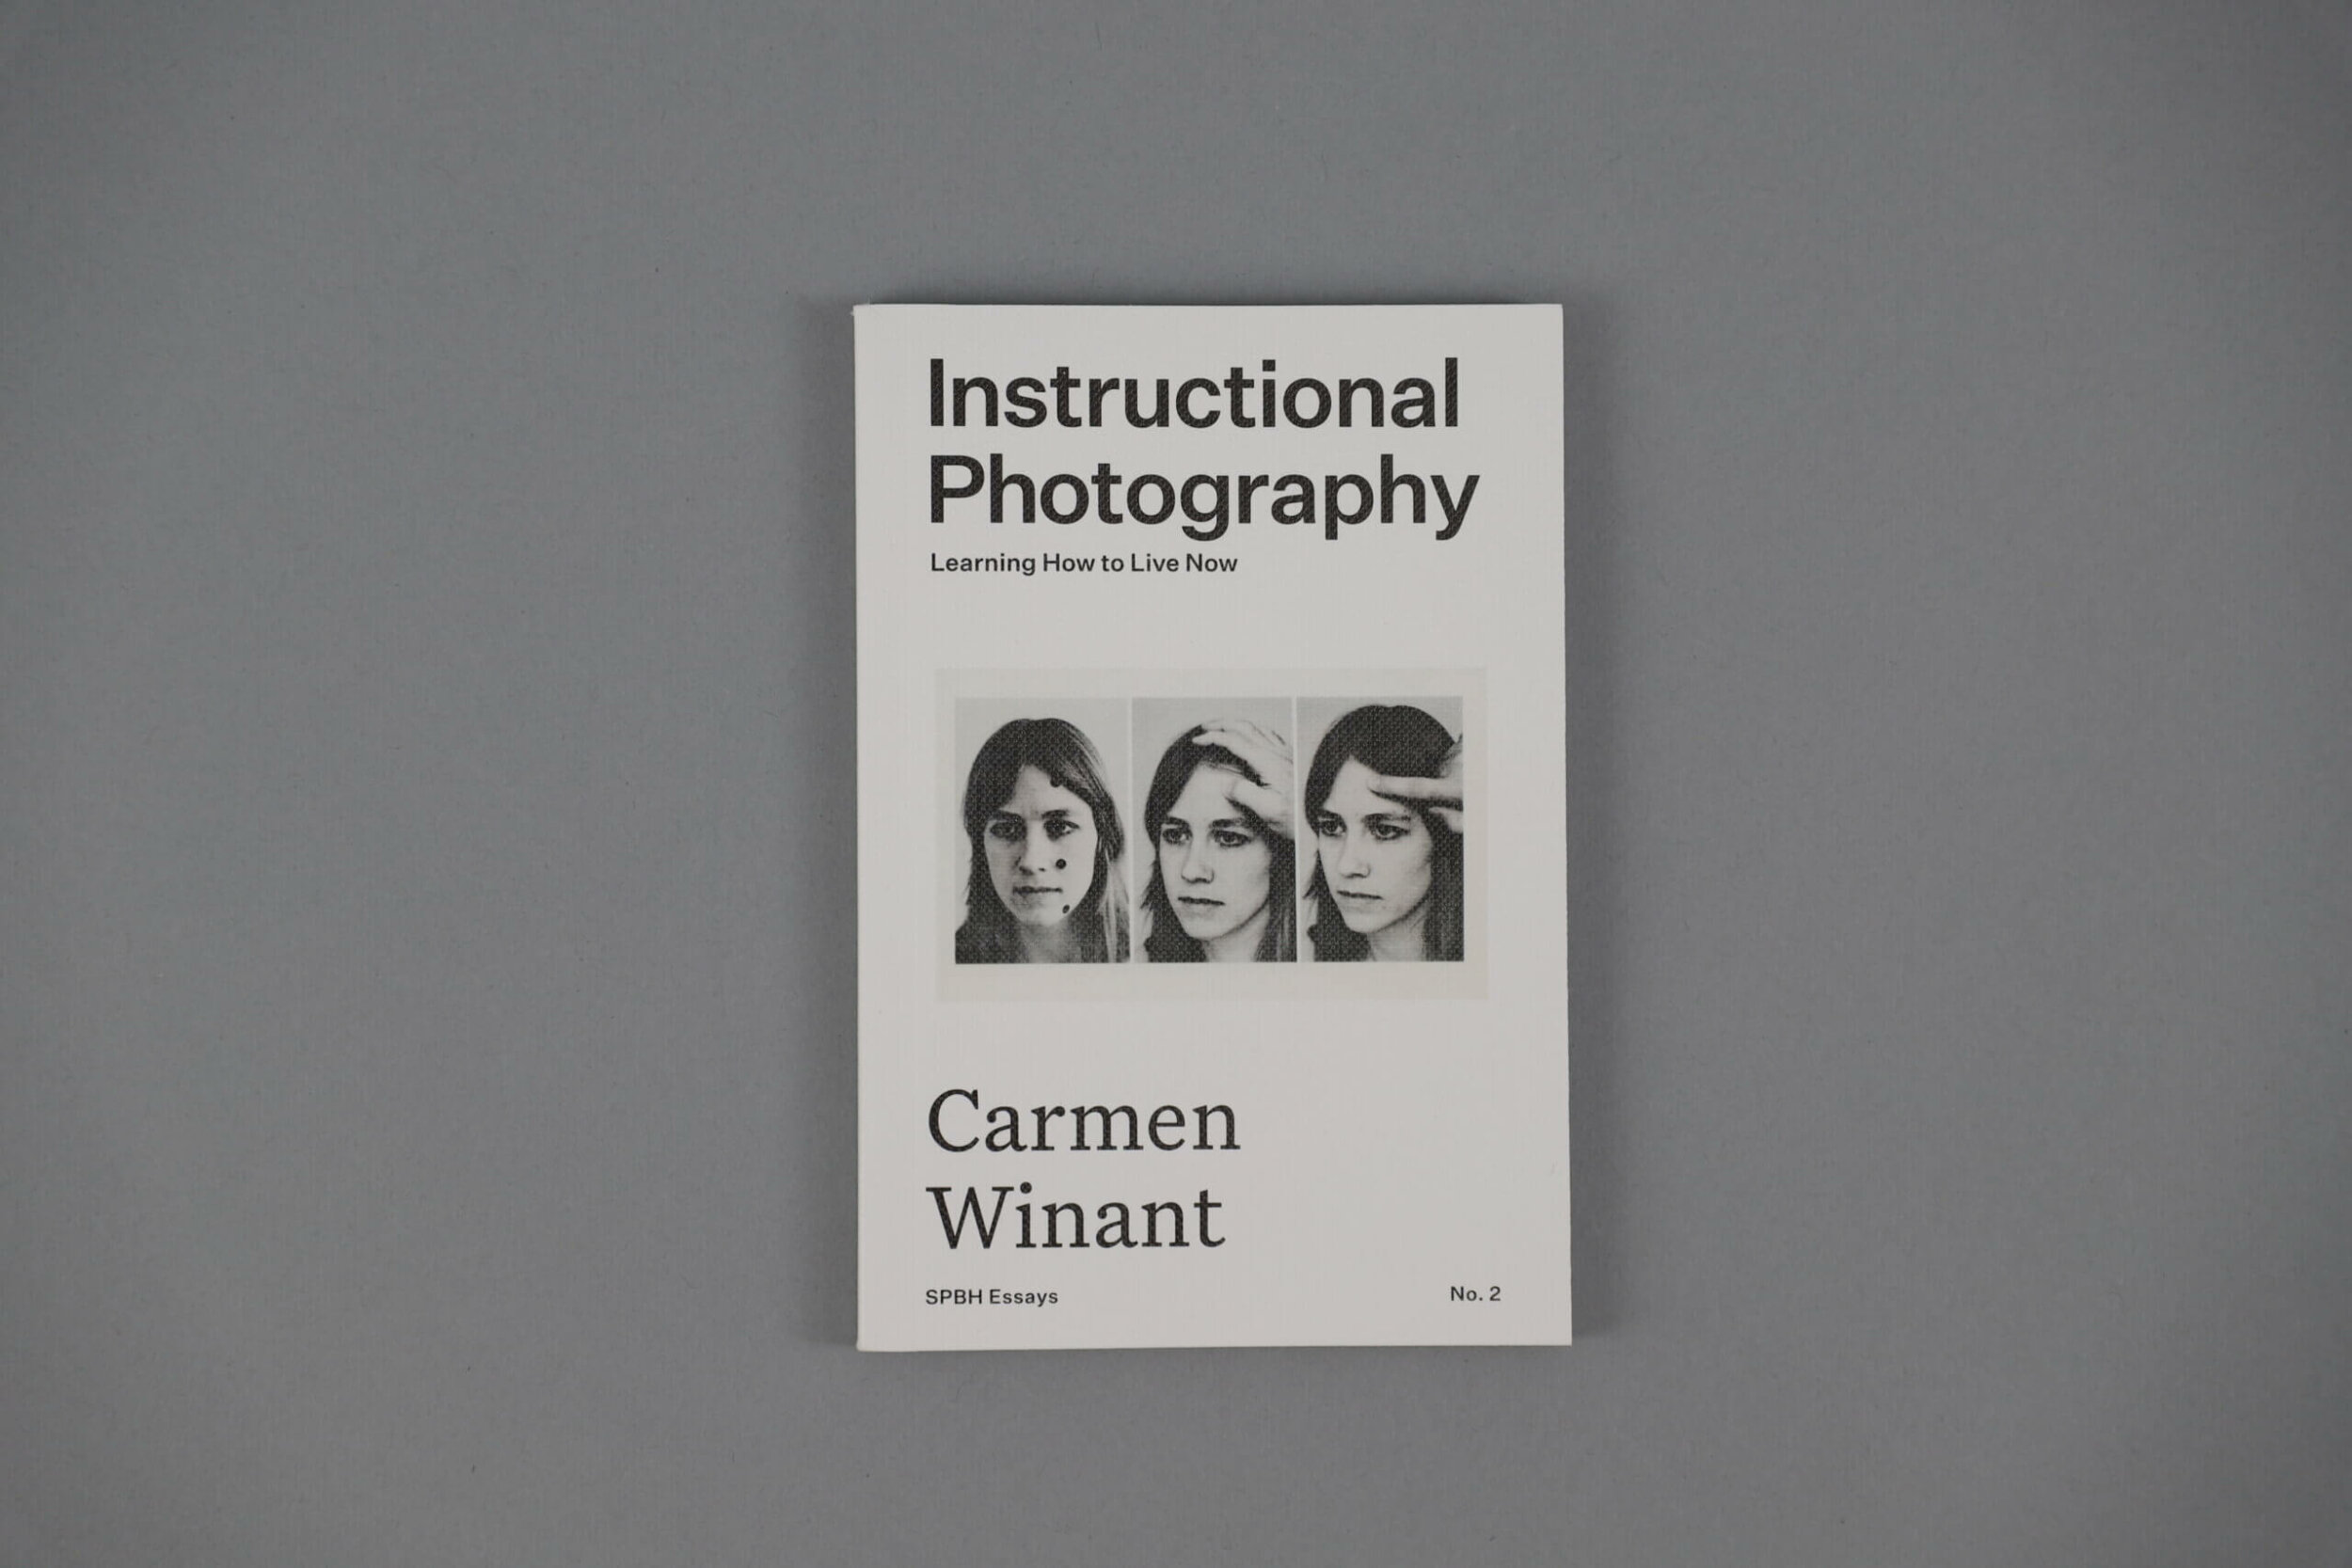 wimant-instrucionalphotography-spbh.1